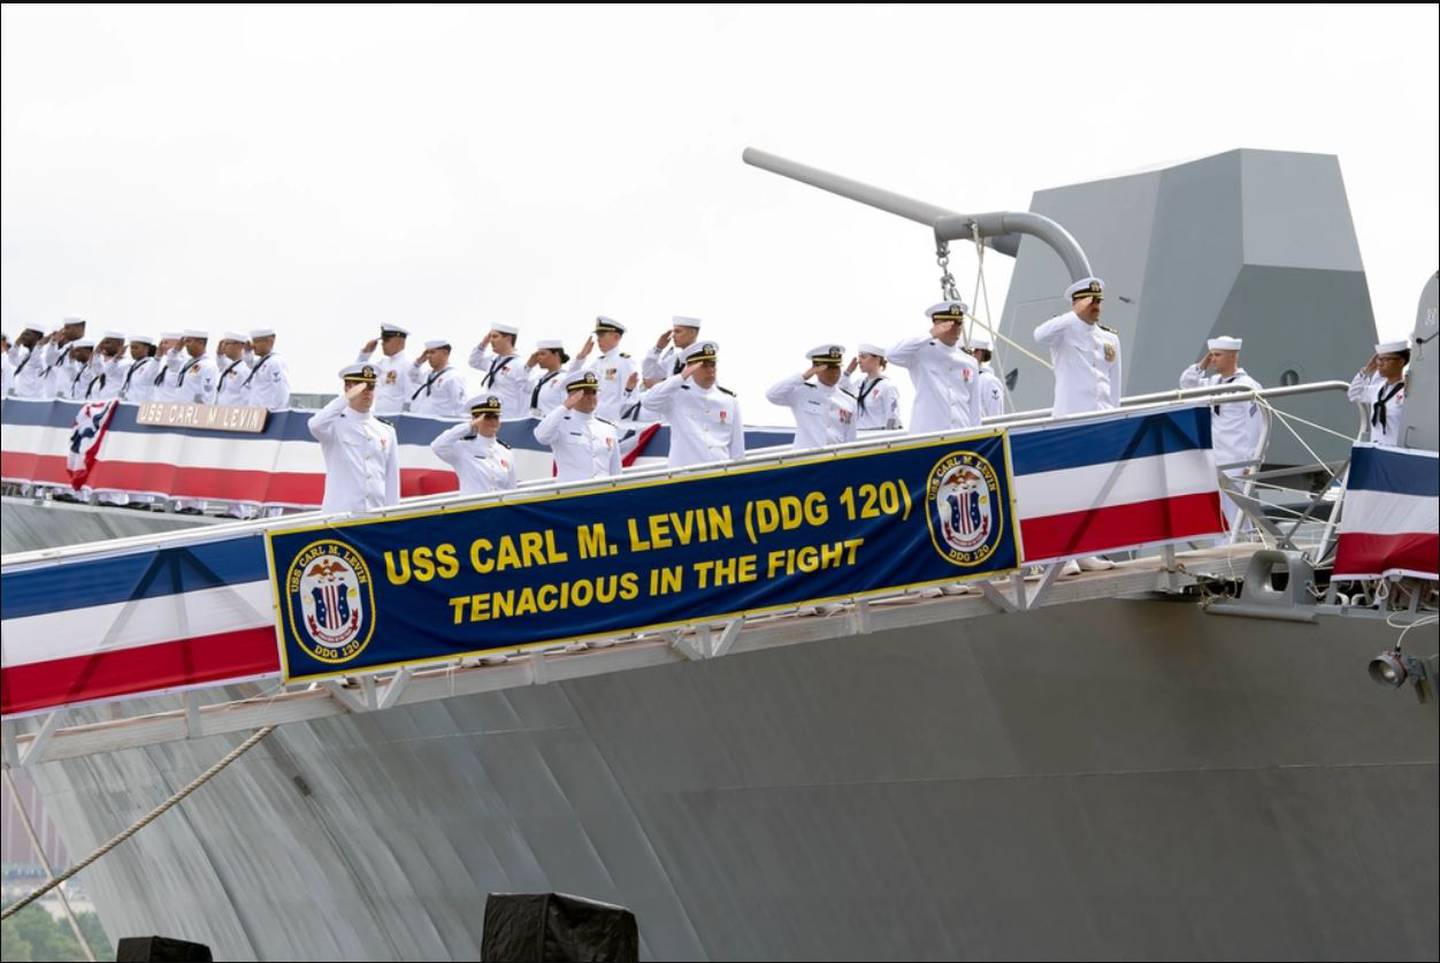 USS Carl M. Levin commissioning